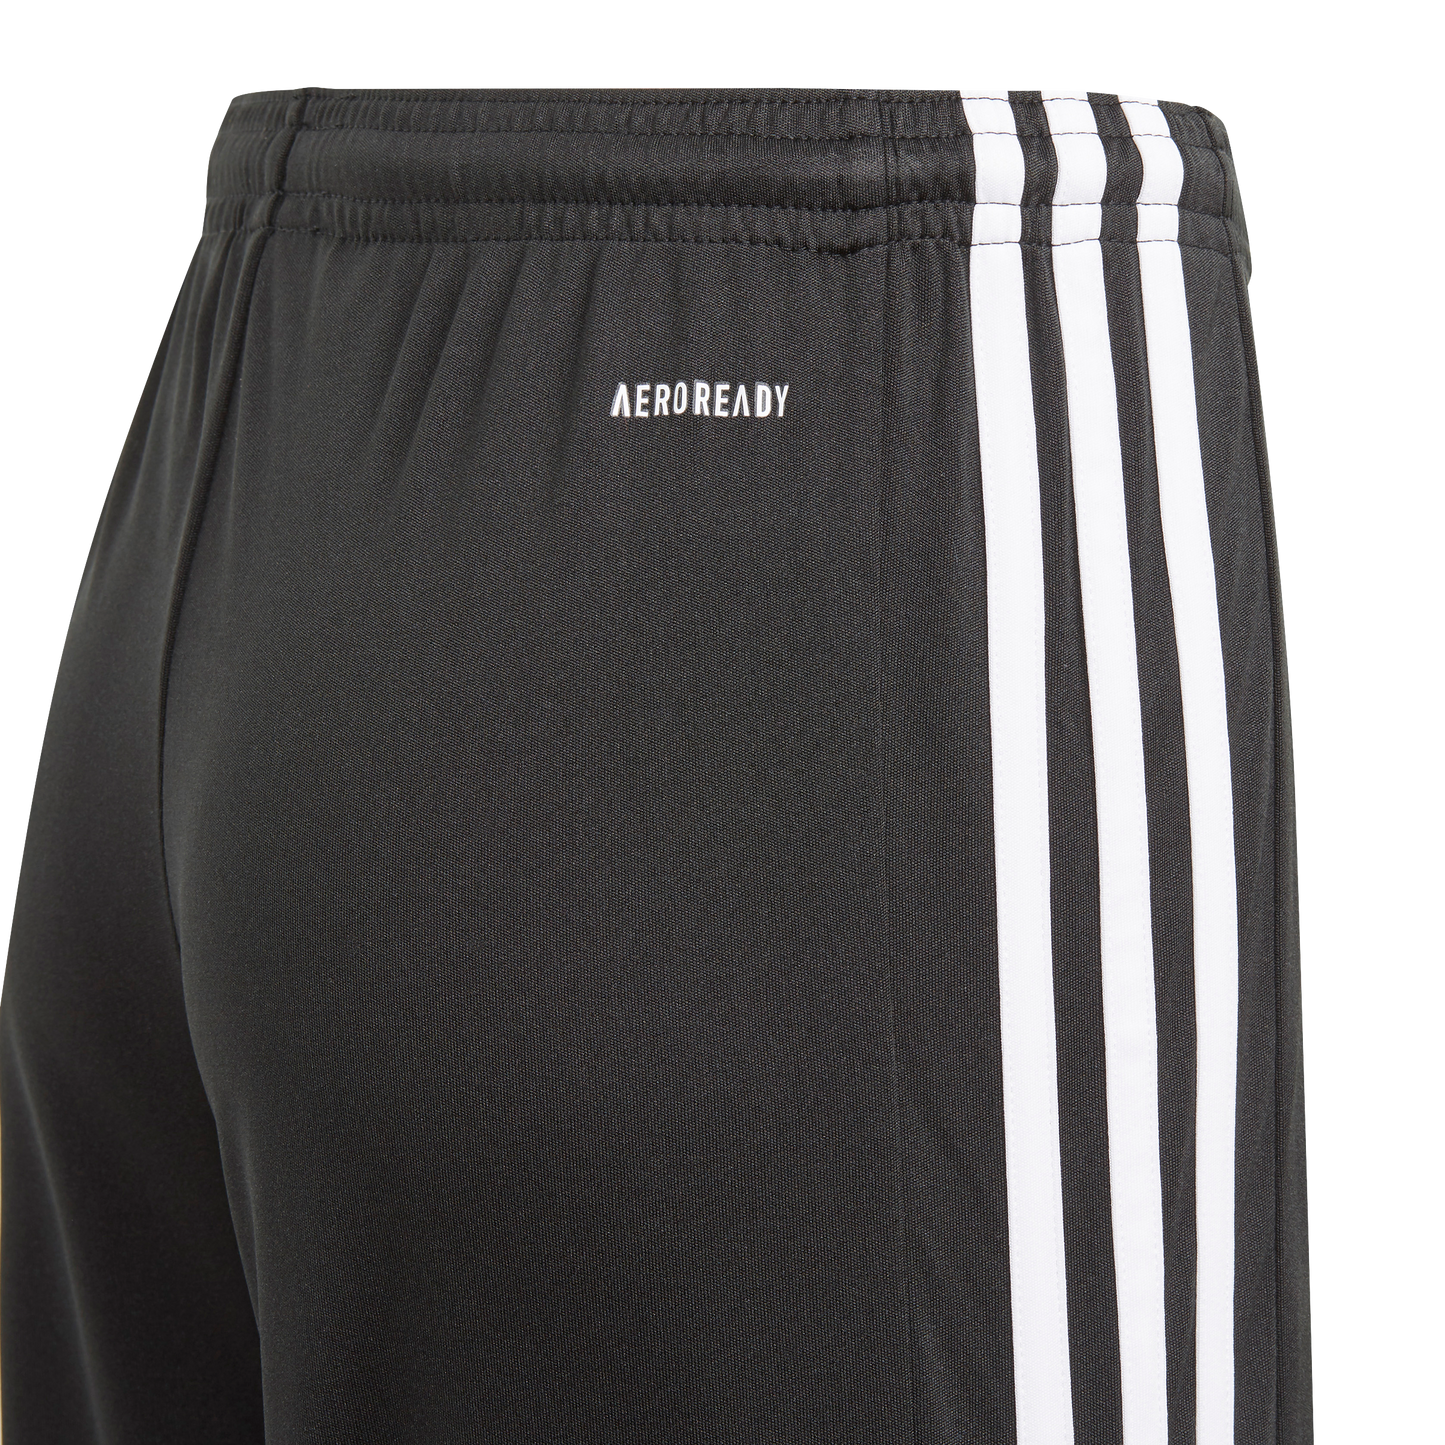 adidas Squadra 21 Men's Soccer Shorts Black